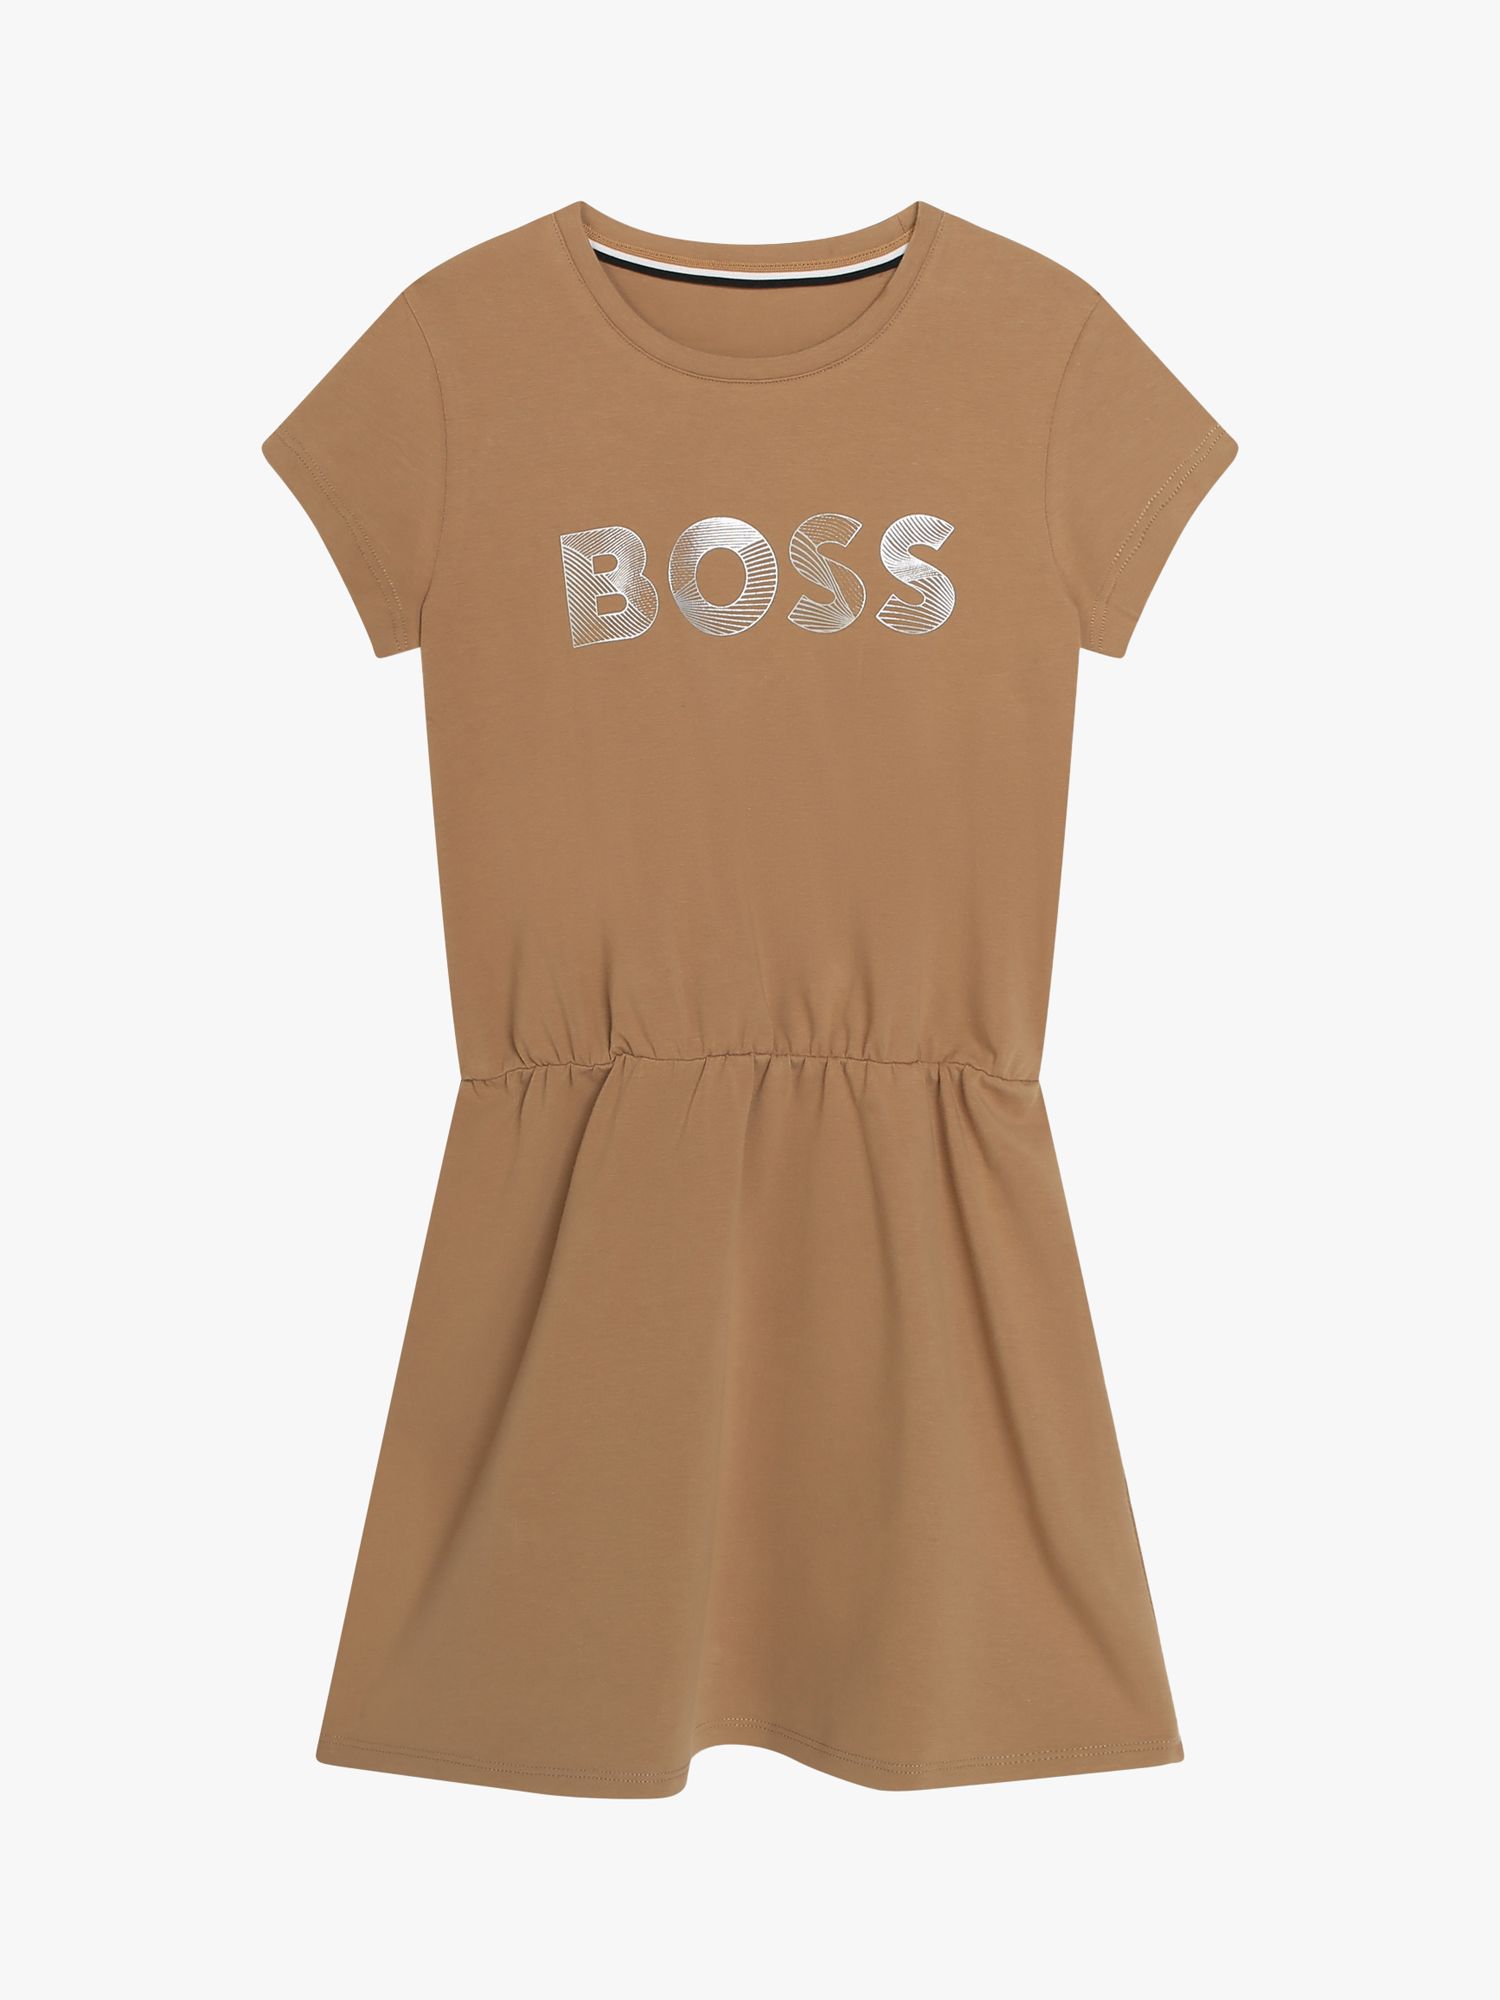 BOSS Kids' Logo Short Sleeve Jersey Dress, Chocolate, 4 years